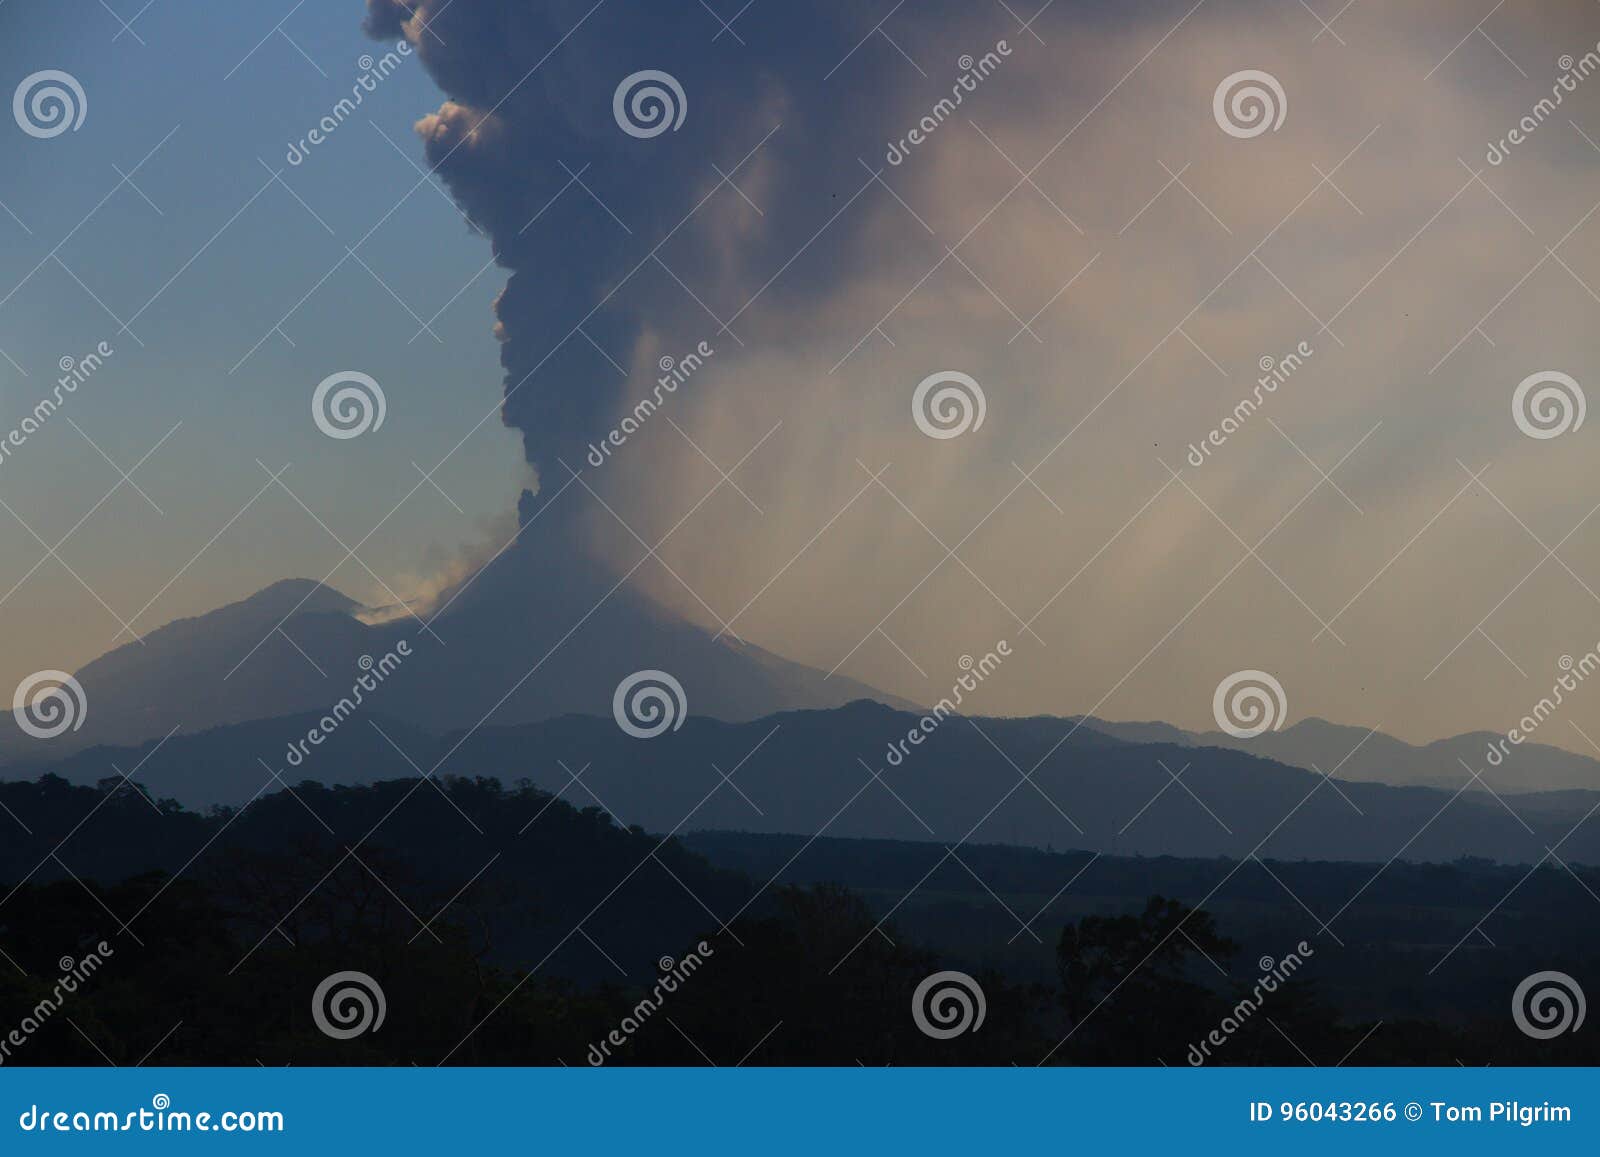 volcano pacaya erupting